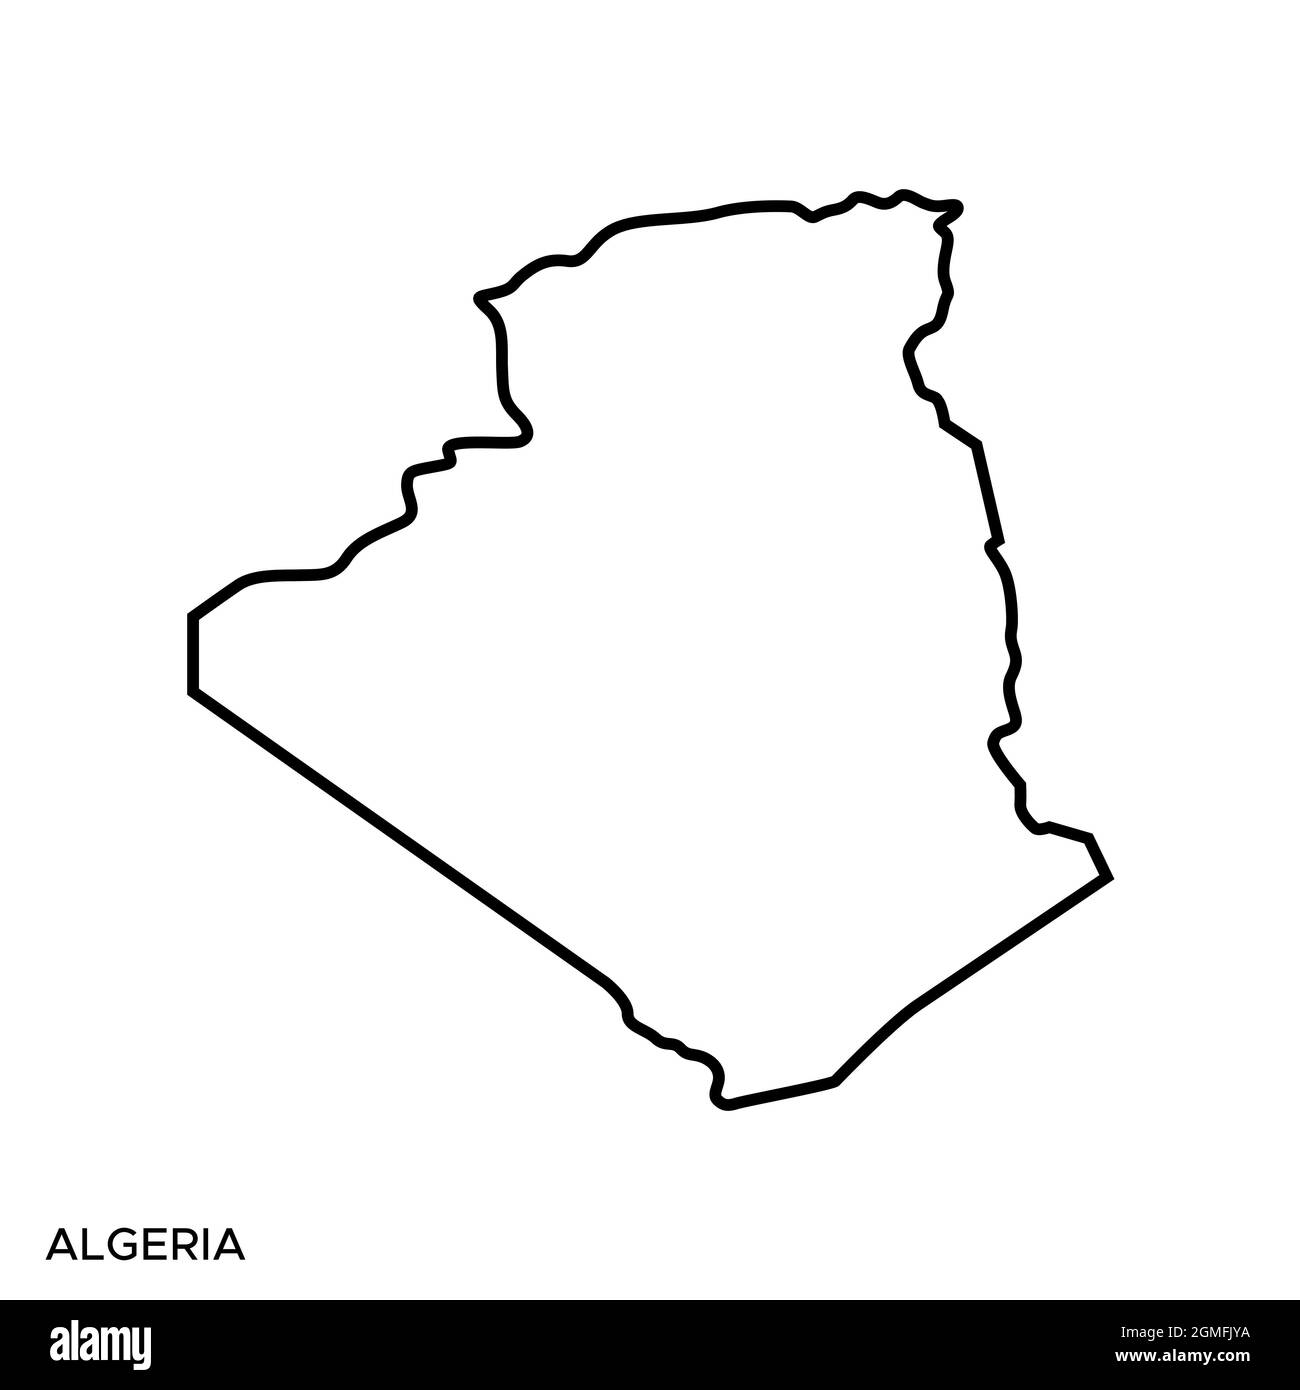 Linienkarte von Algerien Vektor Stock Illustration Design Vorlage. Bearbeitbare Kontur. Vektor eps 10. Stock Vektor